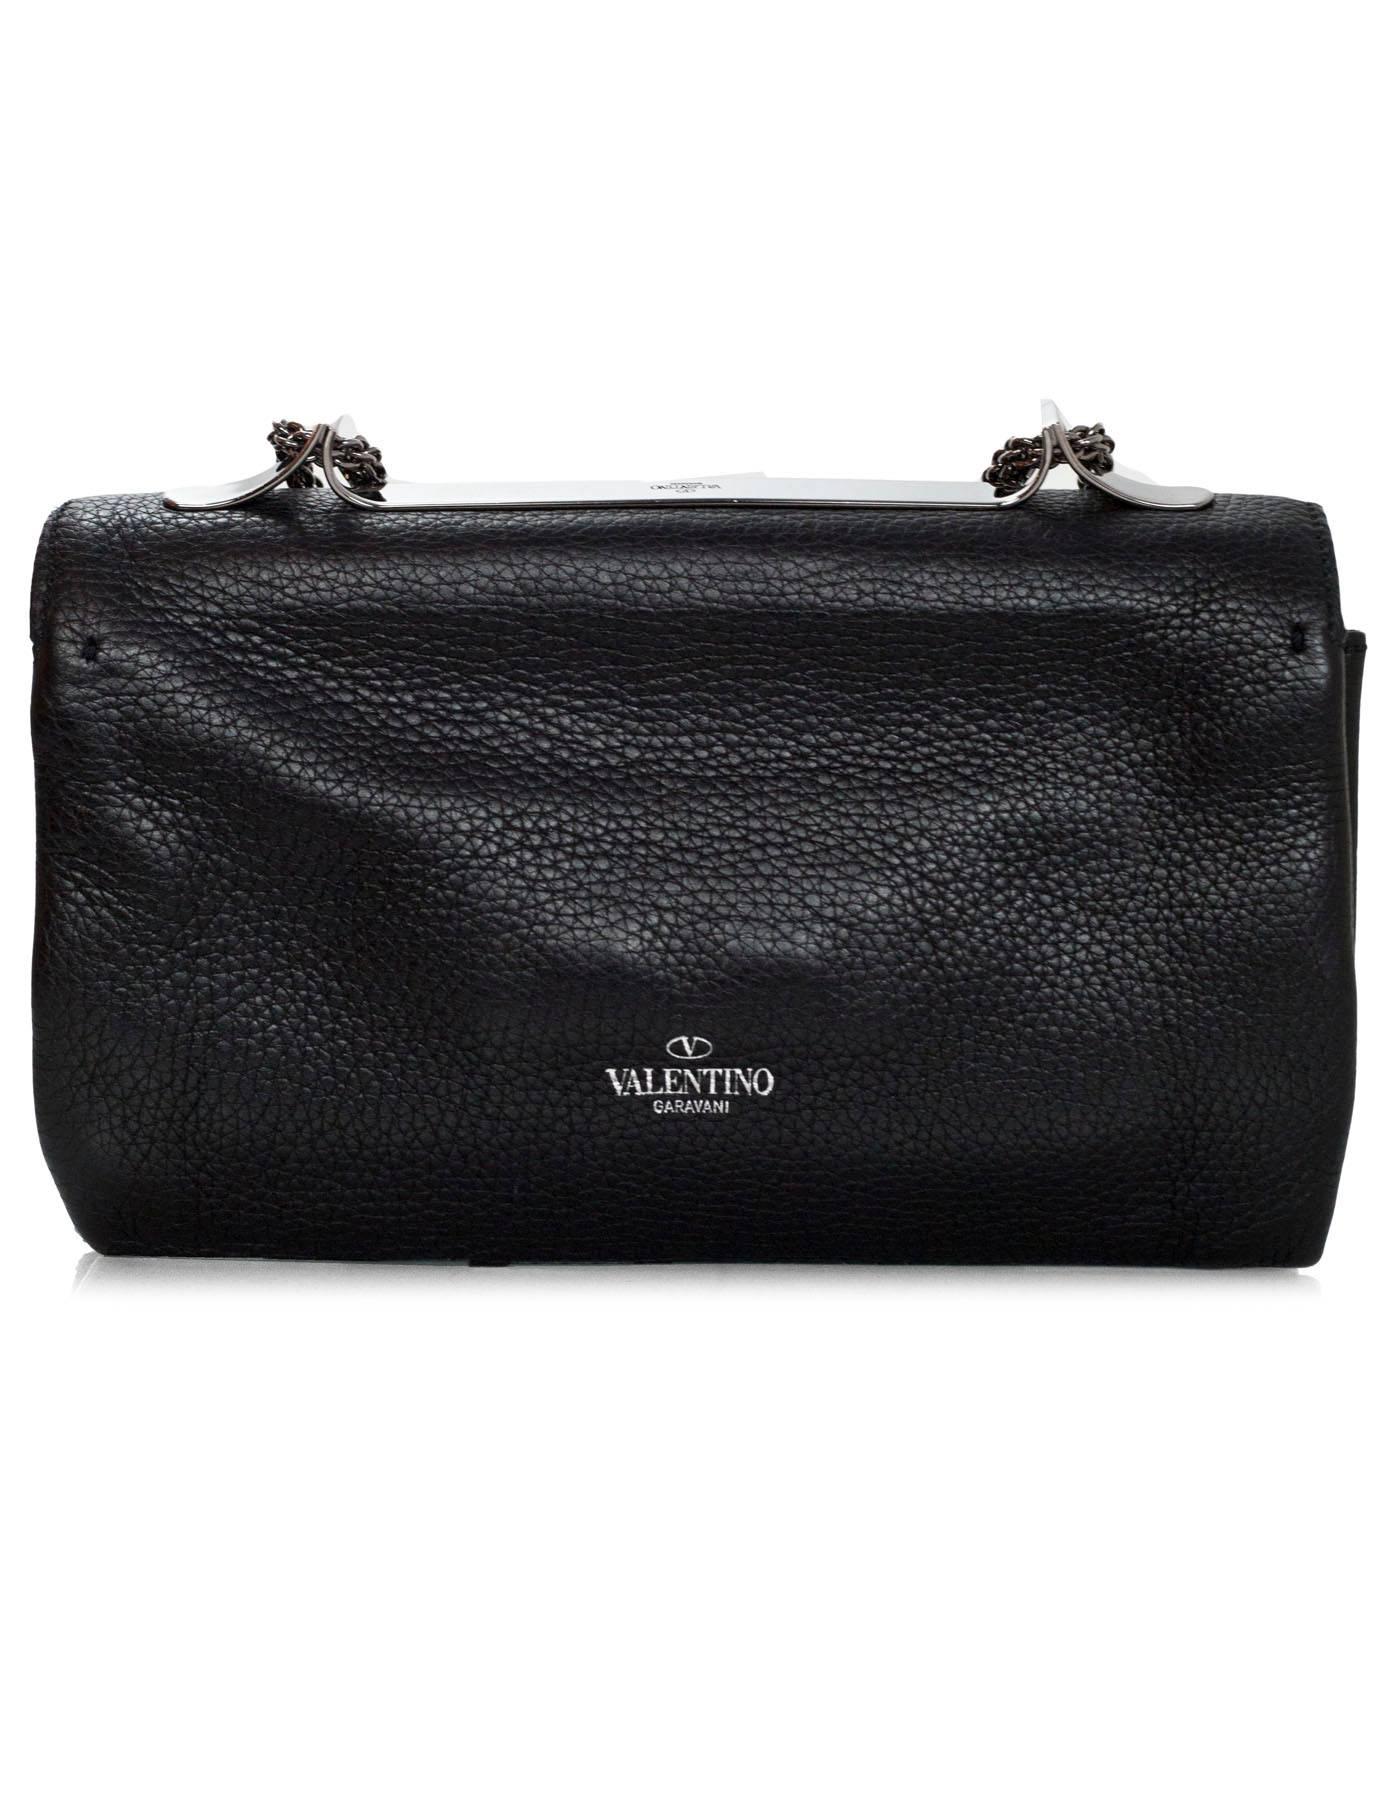 Valentino Black Crystal Studded So Noir Va Va Voom Bag In Excellent Condition In New York, NY